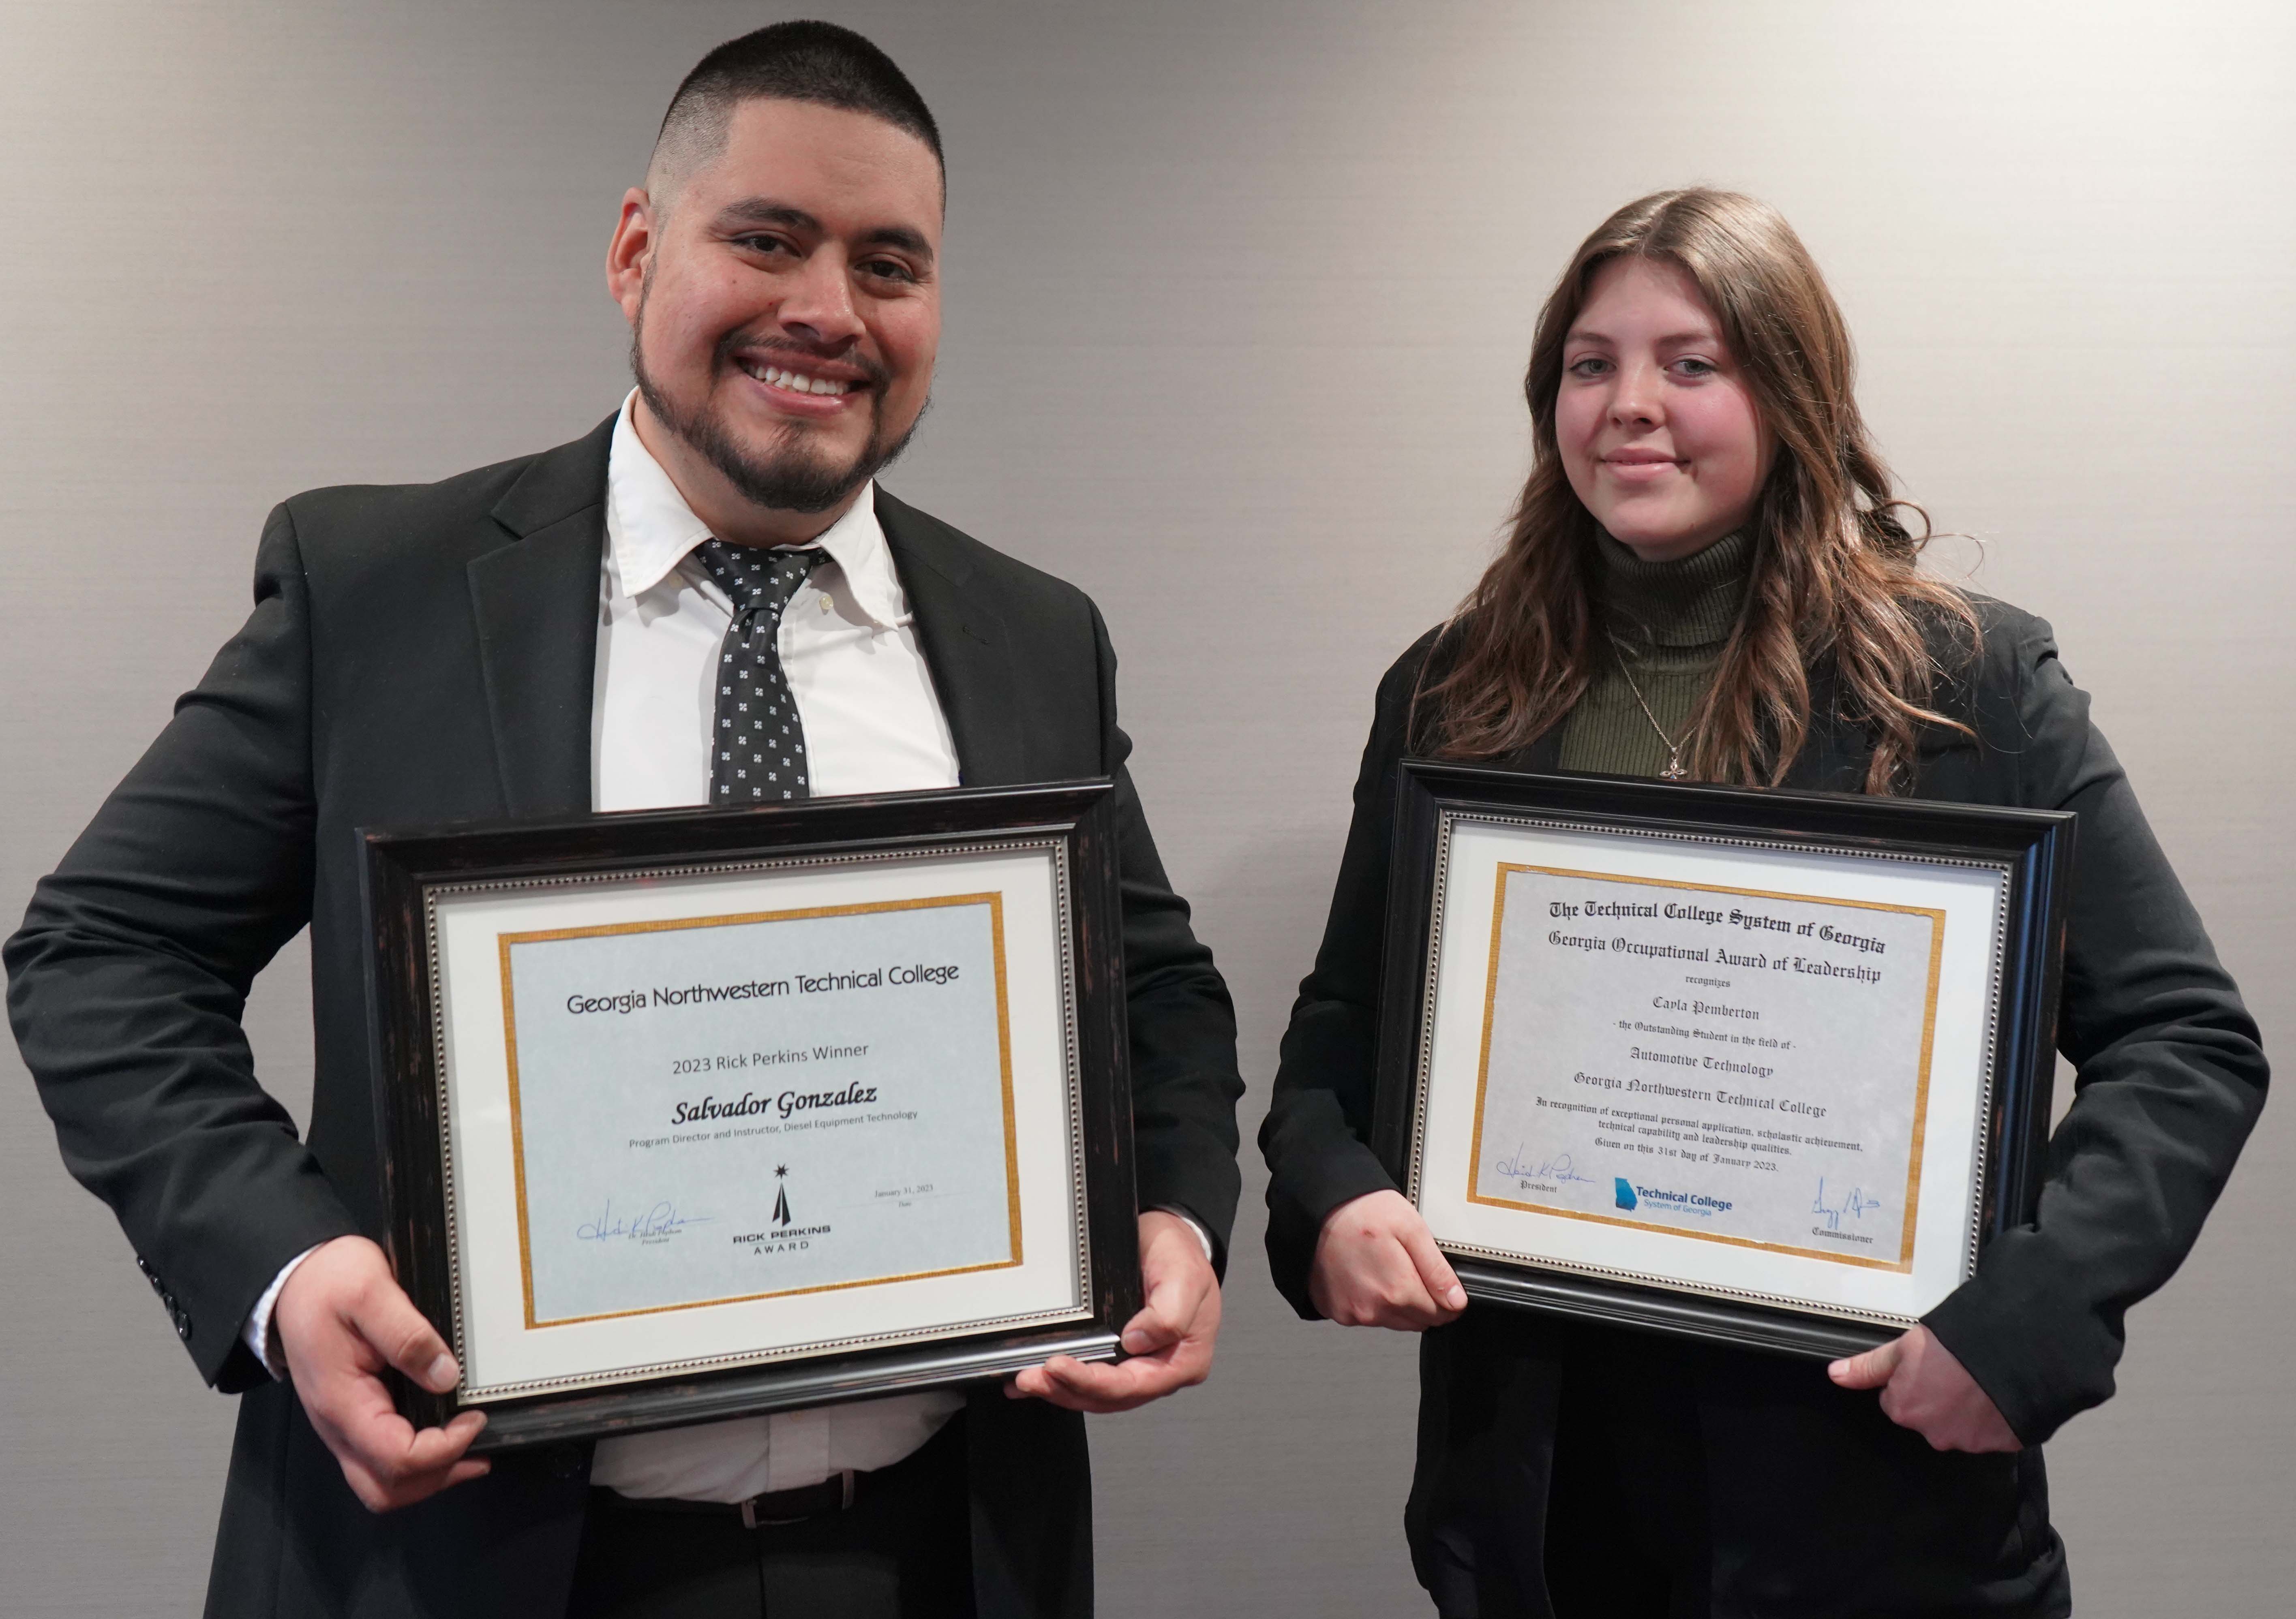 Salvador Gonzalez (left) is the winner of GNTC’s 2023 Rick Perkins Award, and Cayla Pemberton is the winner of GNTC’s 2023 GOAL Award. 